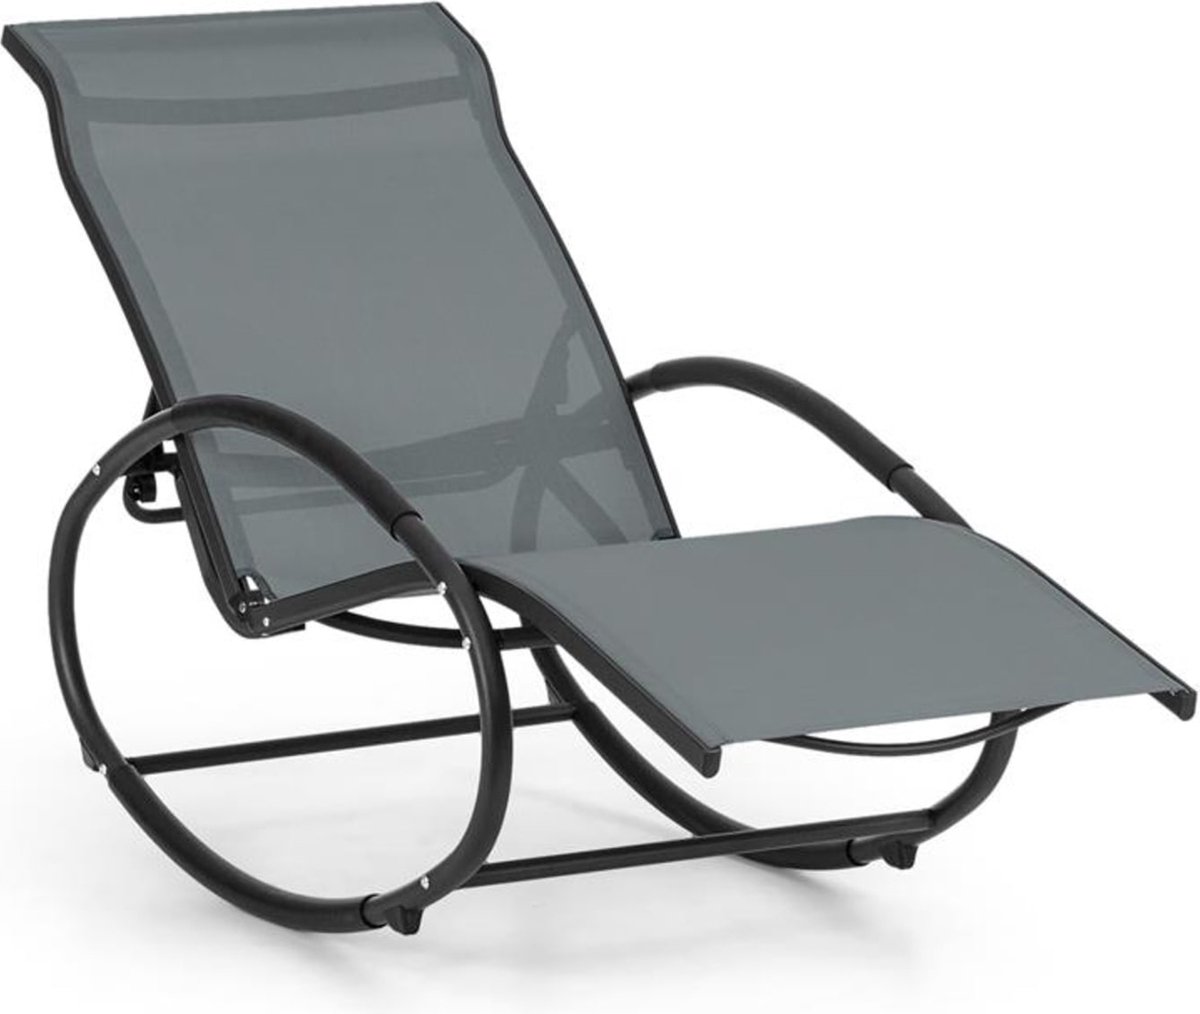 Santorini schommelstoel ligstoel aluminium polyester grijs